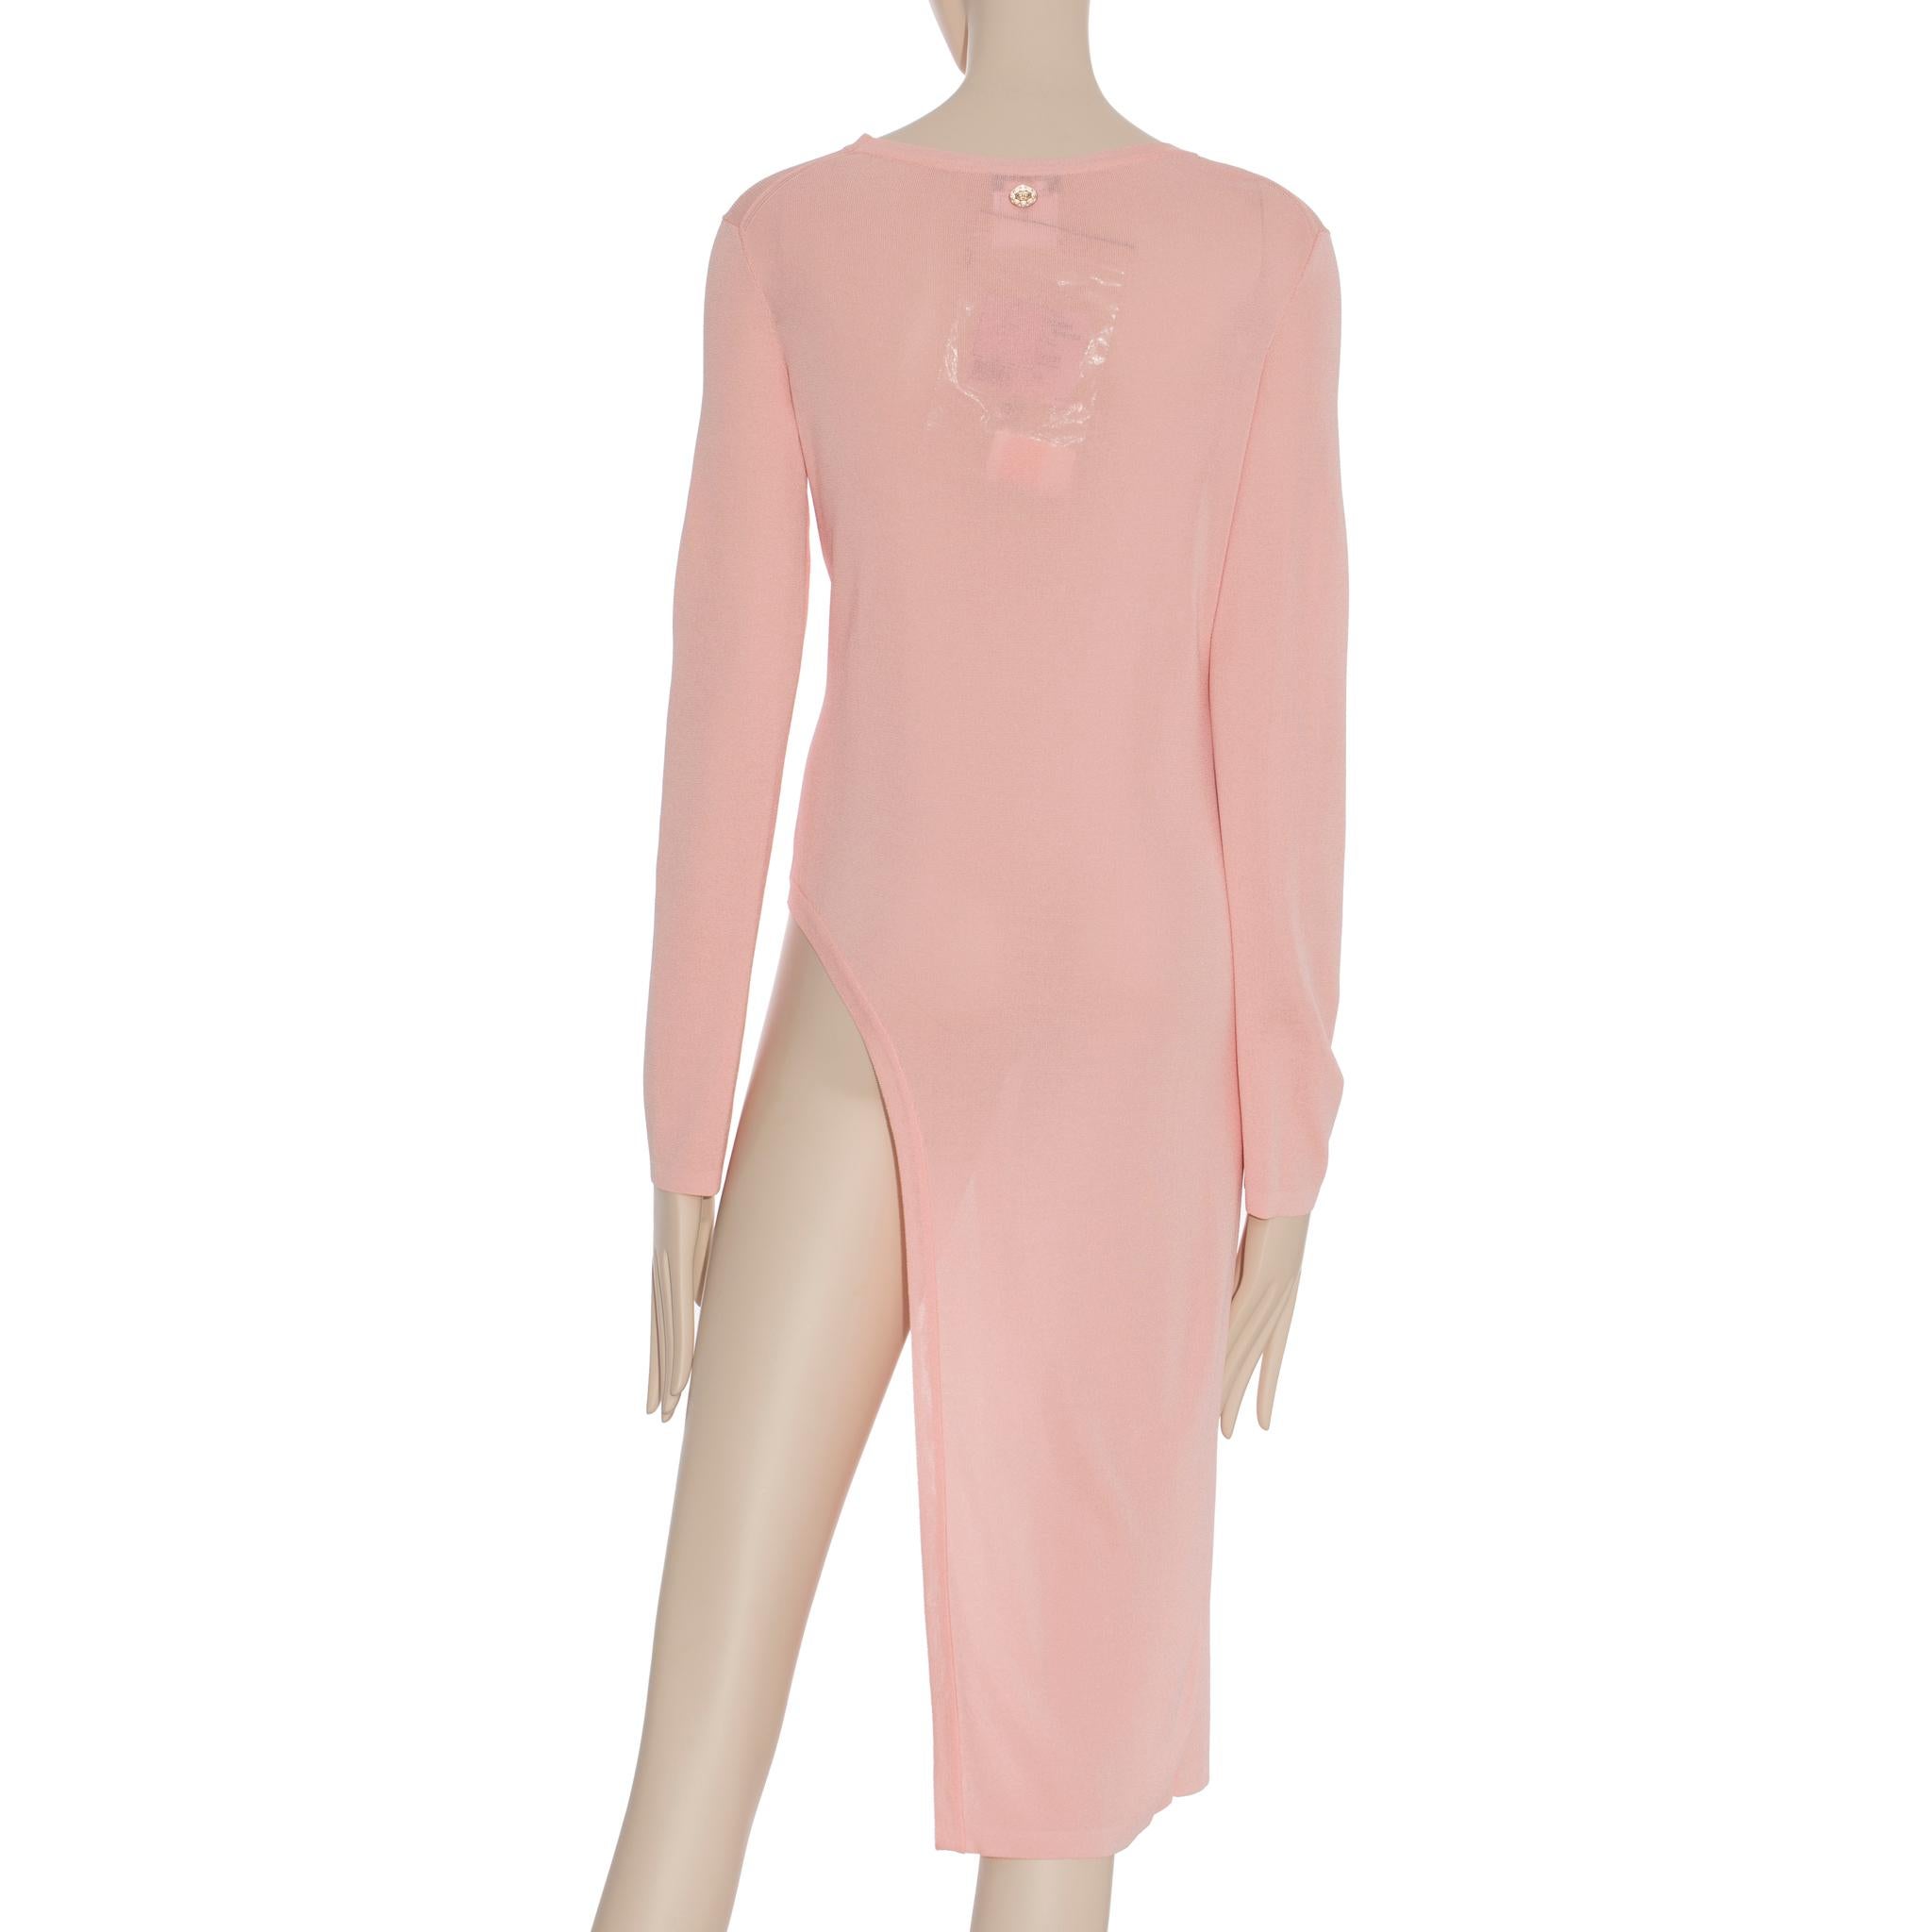 Chanel Knit Rosa Langarm Kleid/Top 40 FR Damen im Angebot